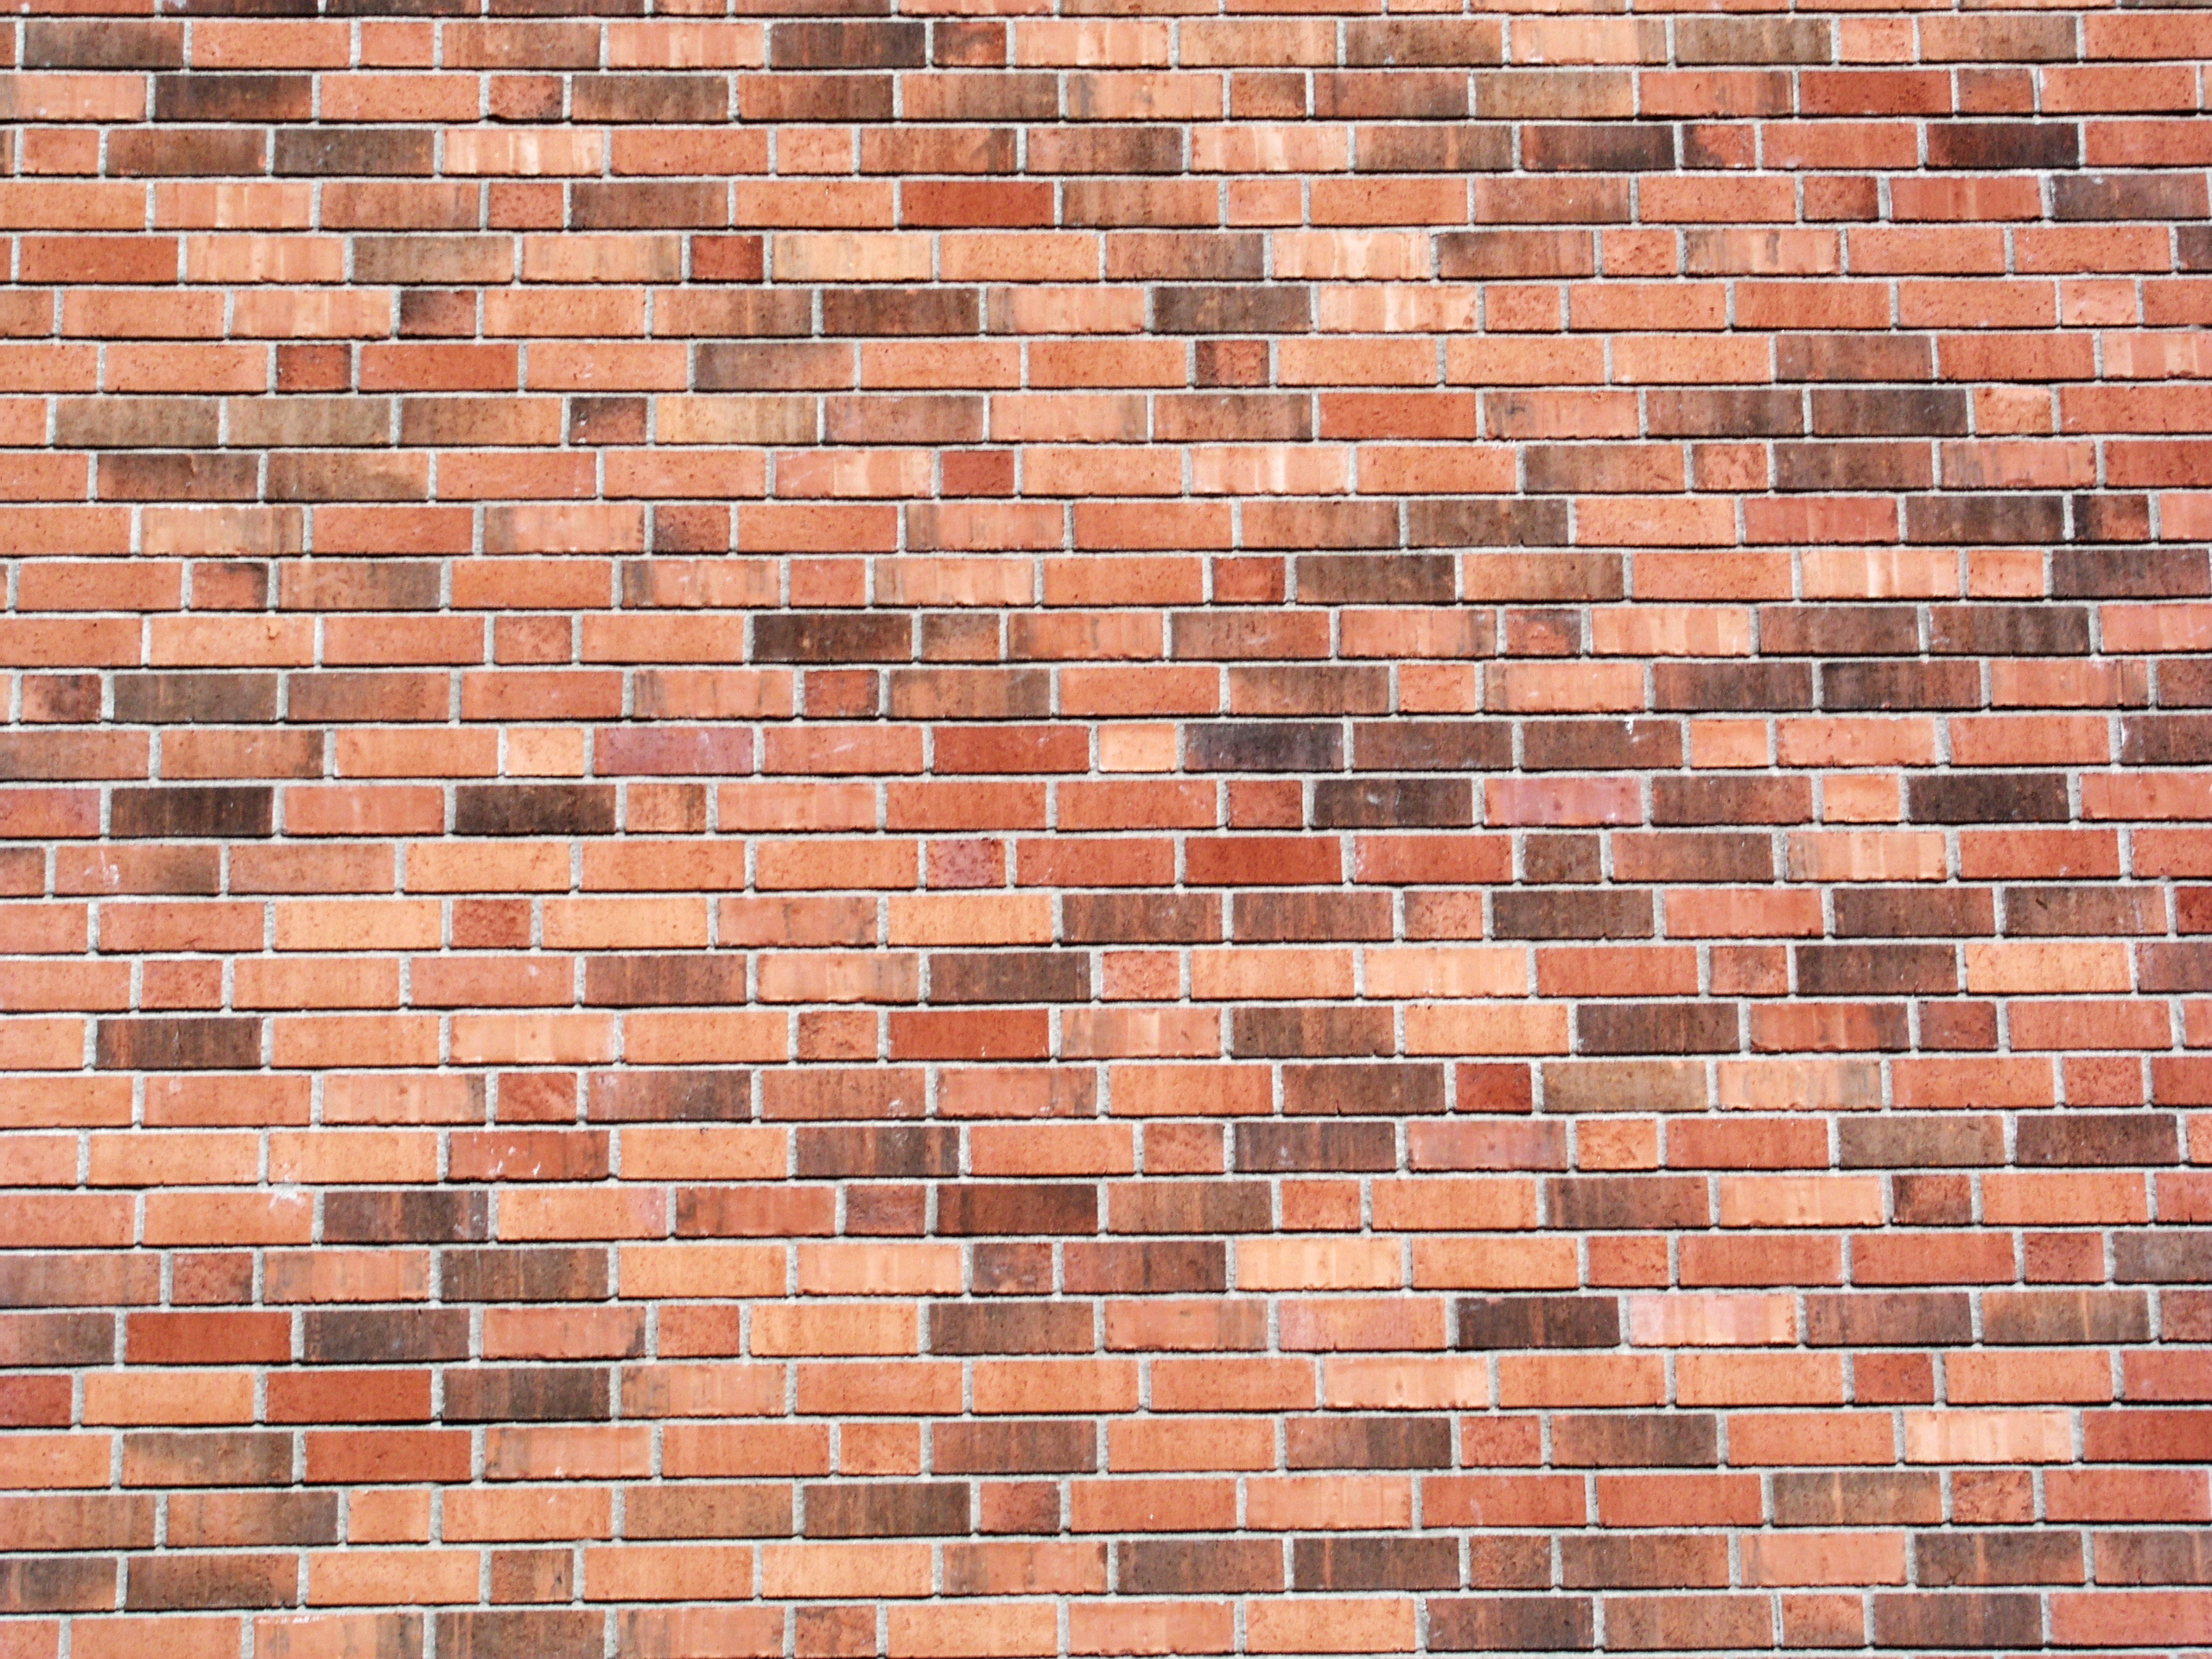 File:Solna Brick wall vilt forband.jpg - Wikimedia Commons